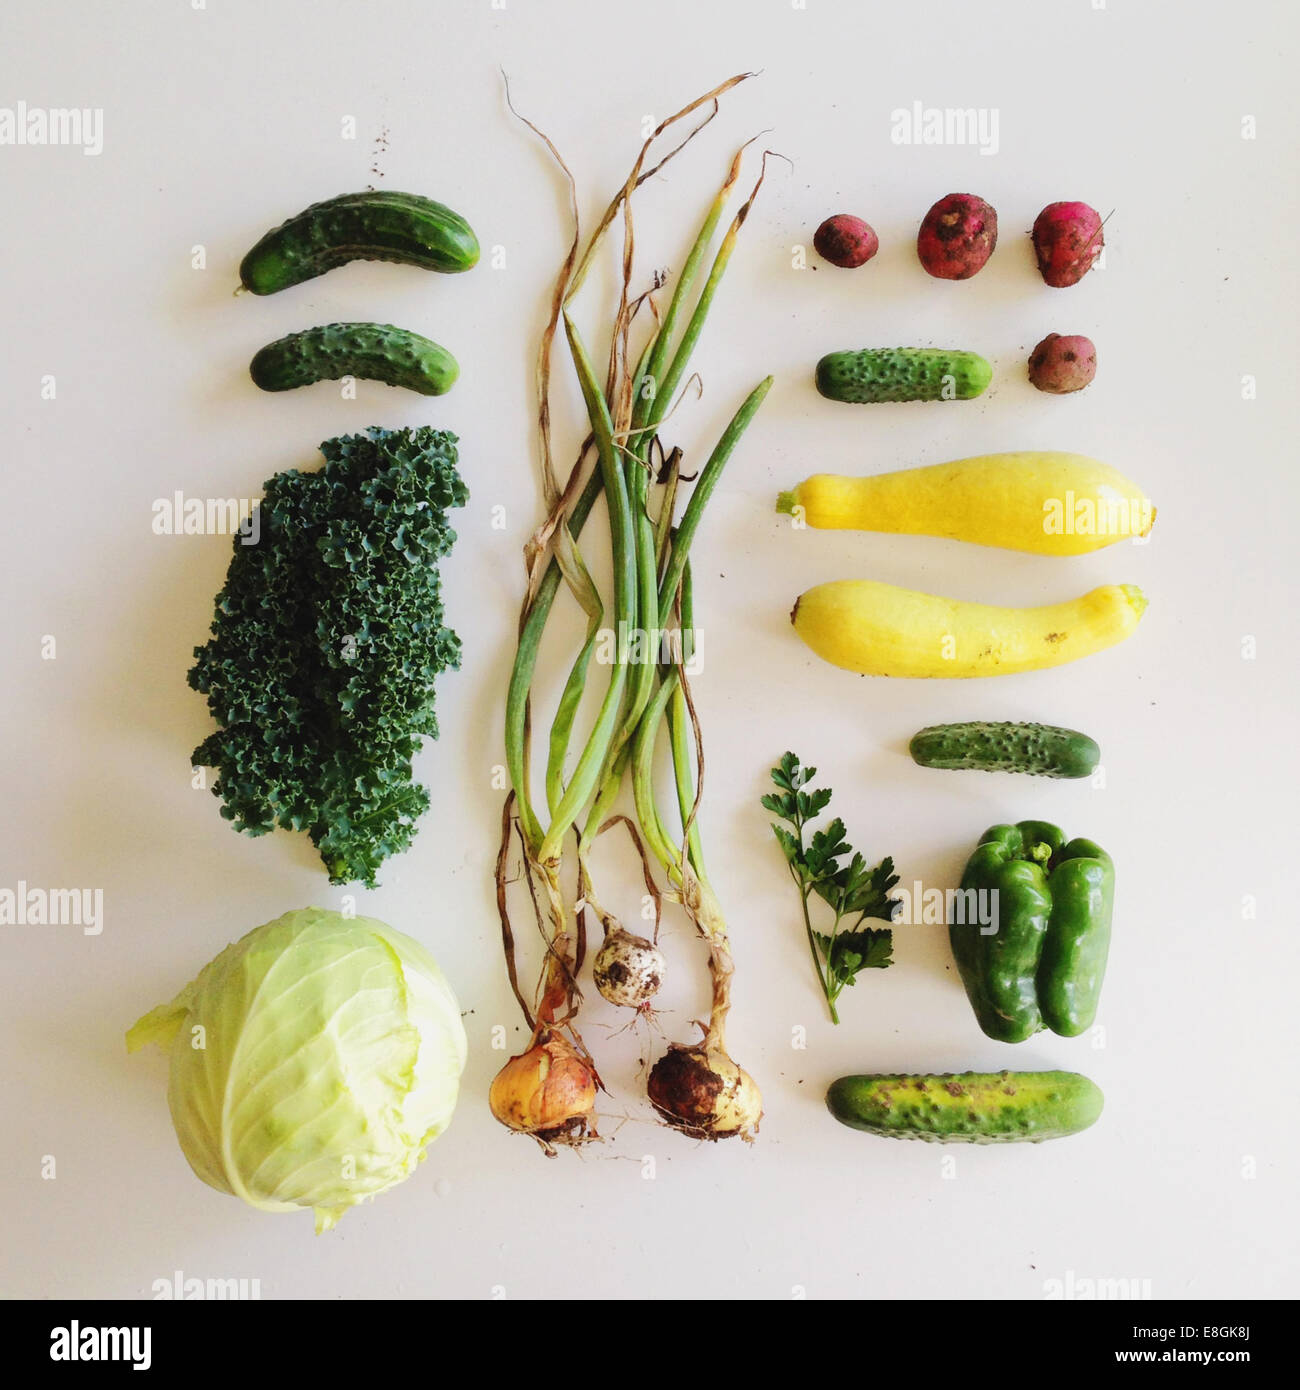 Arrangement of fresh vegetables Stock Photo